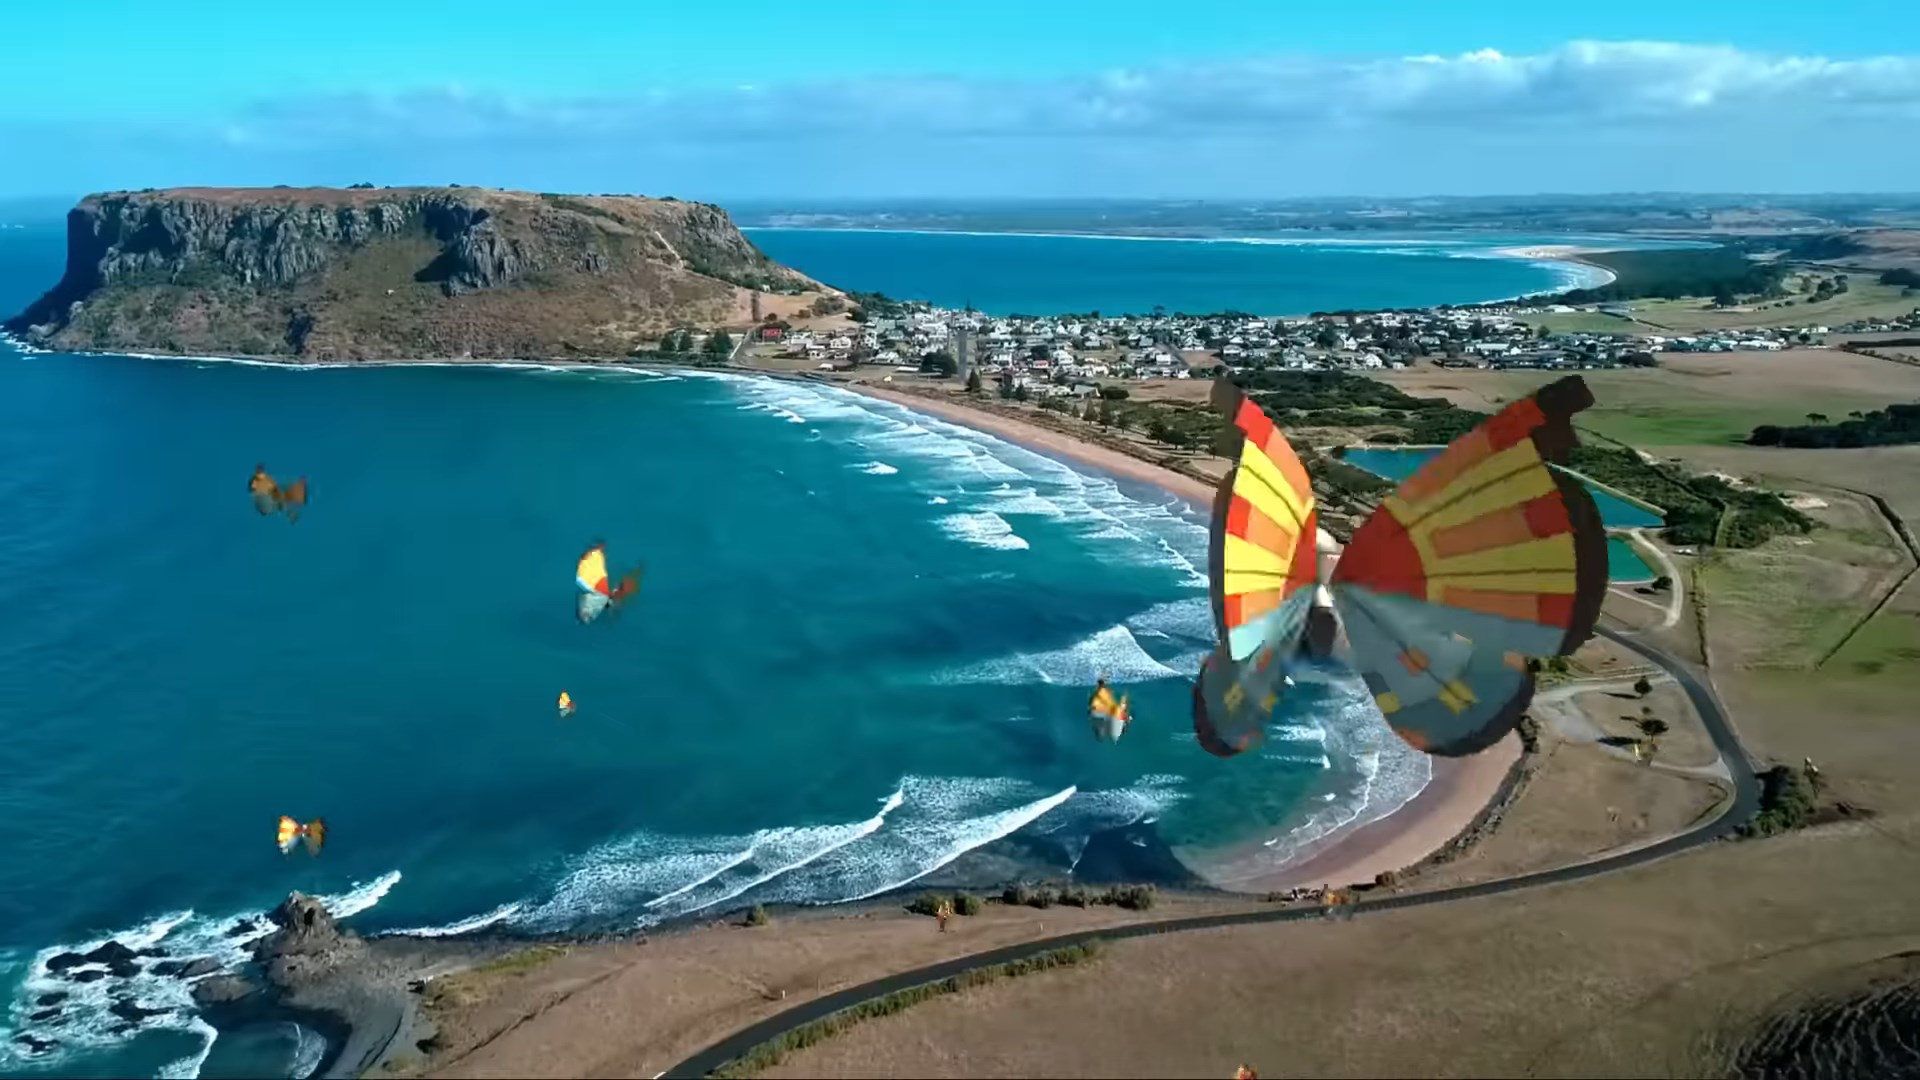 Vivillon fly over the ocean in real life